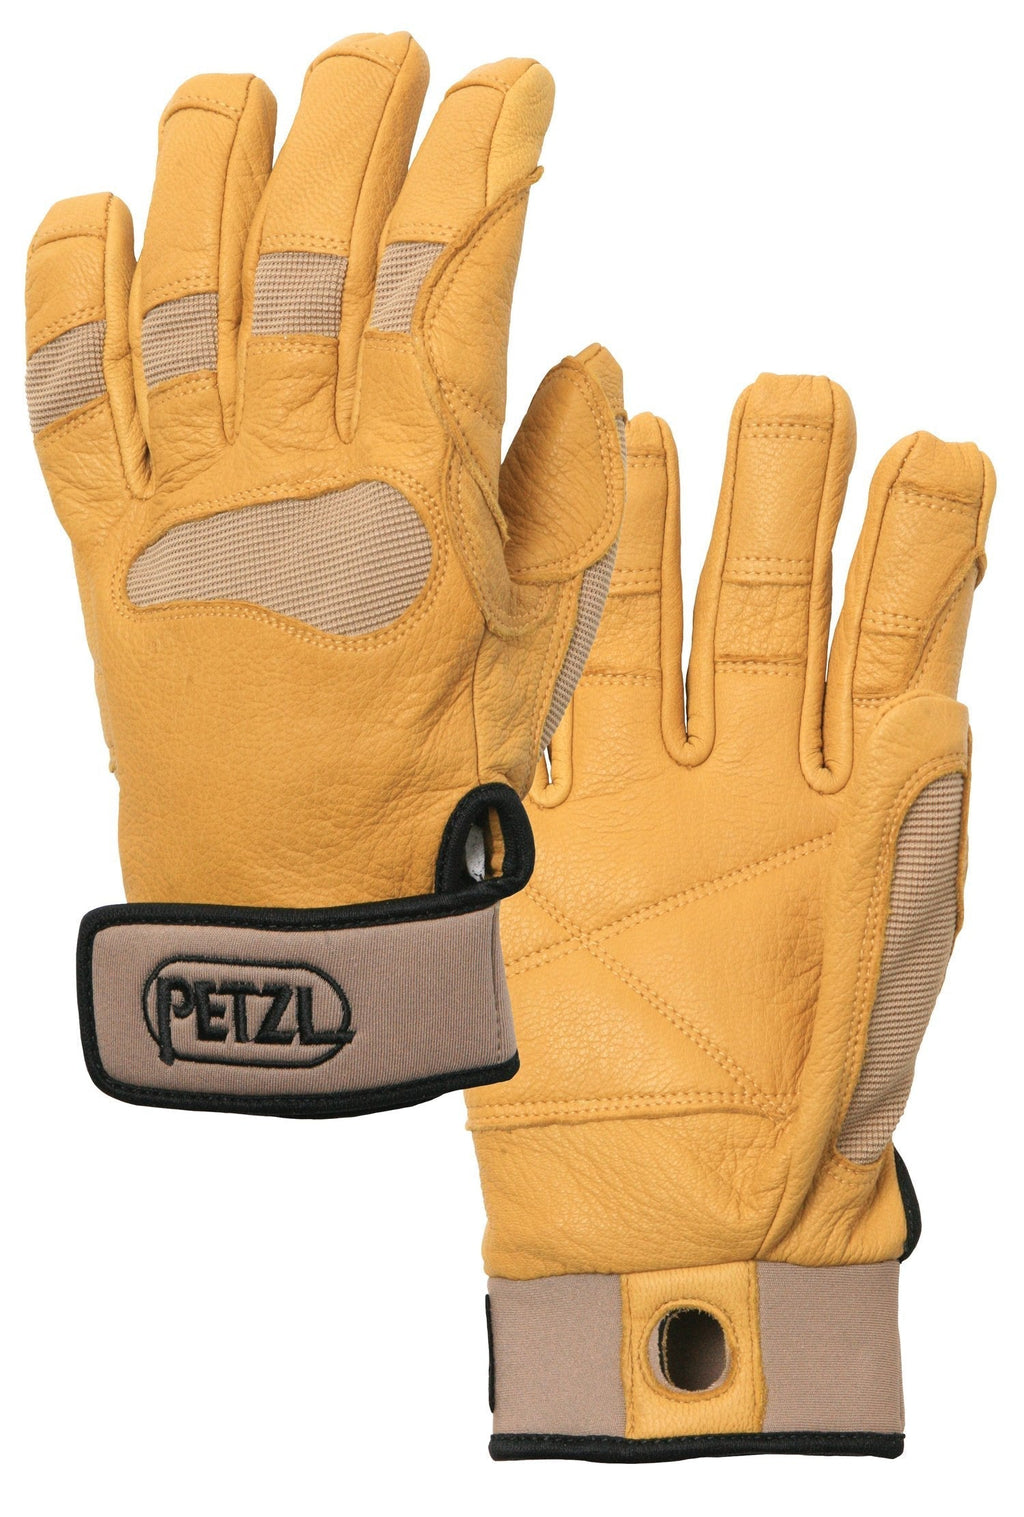 Petzl - CORDEX PLUS, Gloves for Climbers X-Small Tan - BeesActive Australia